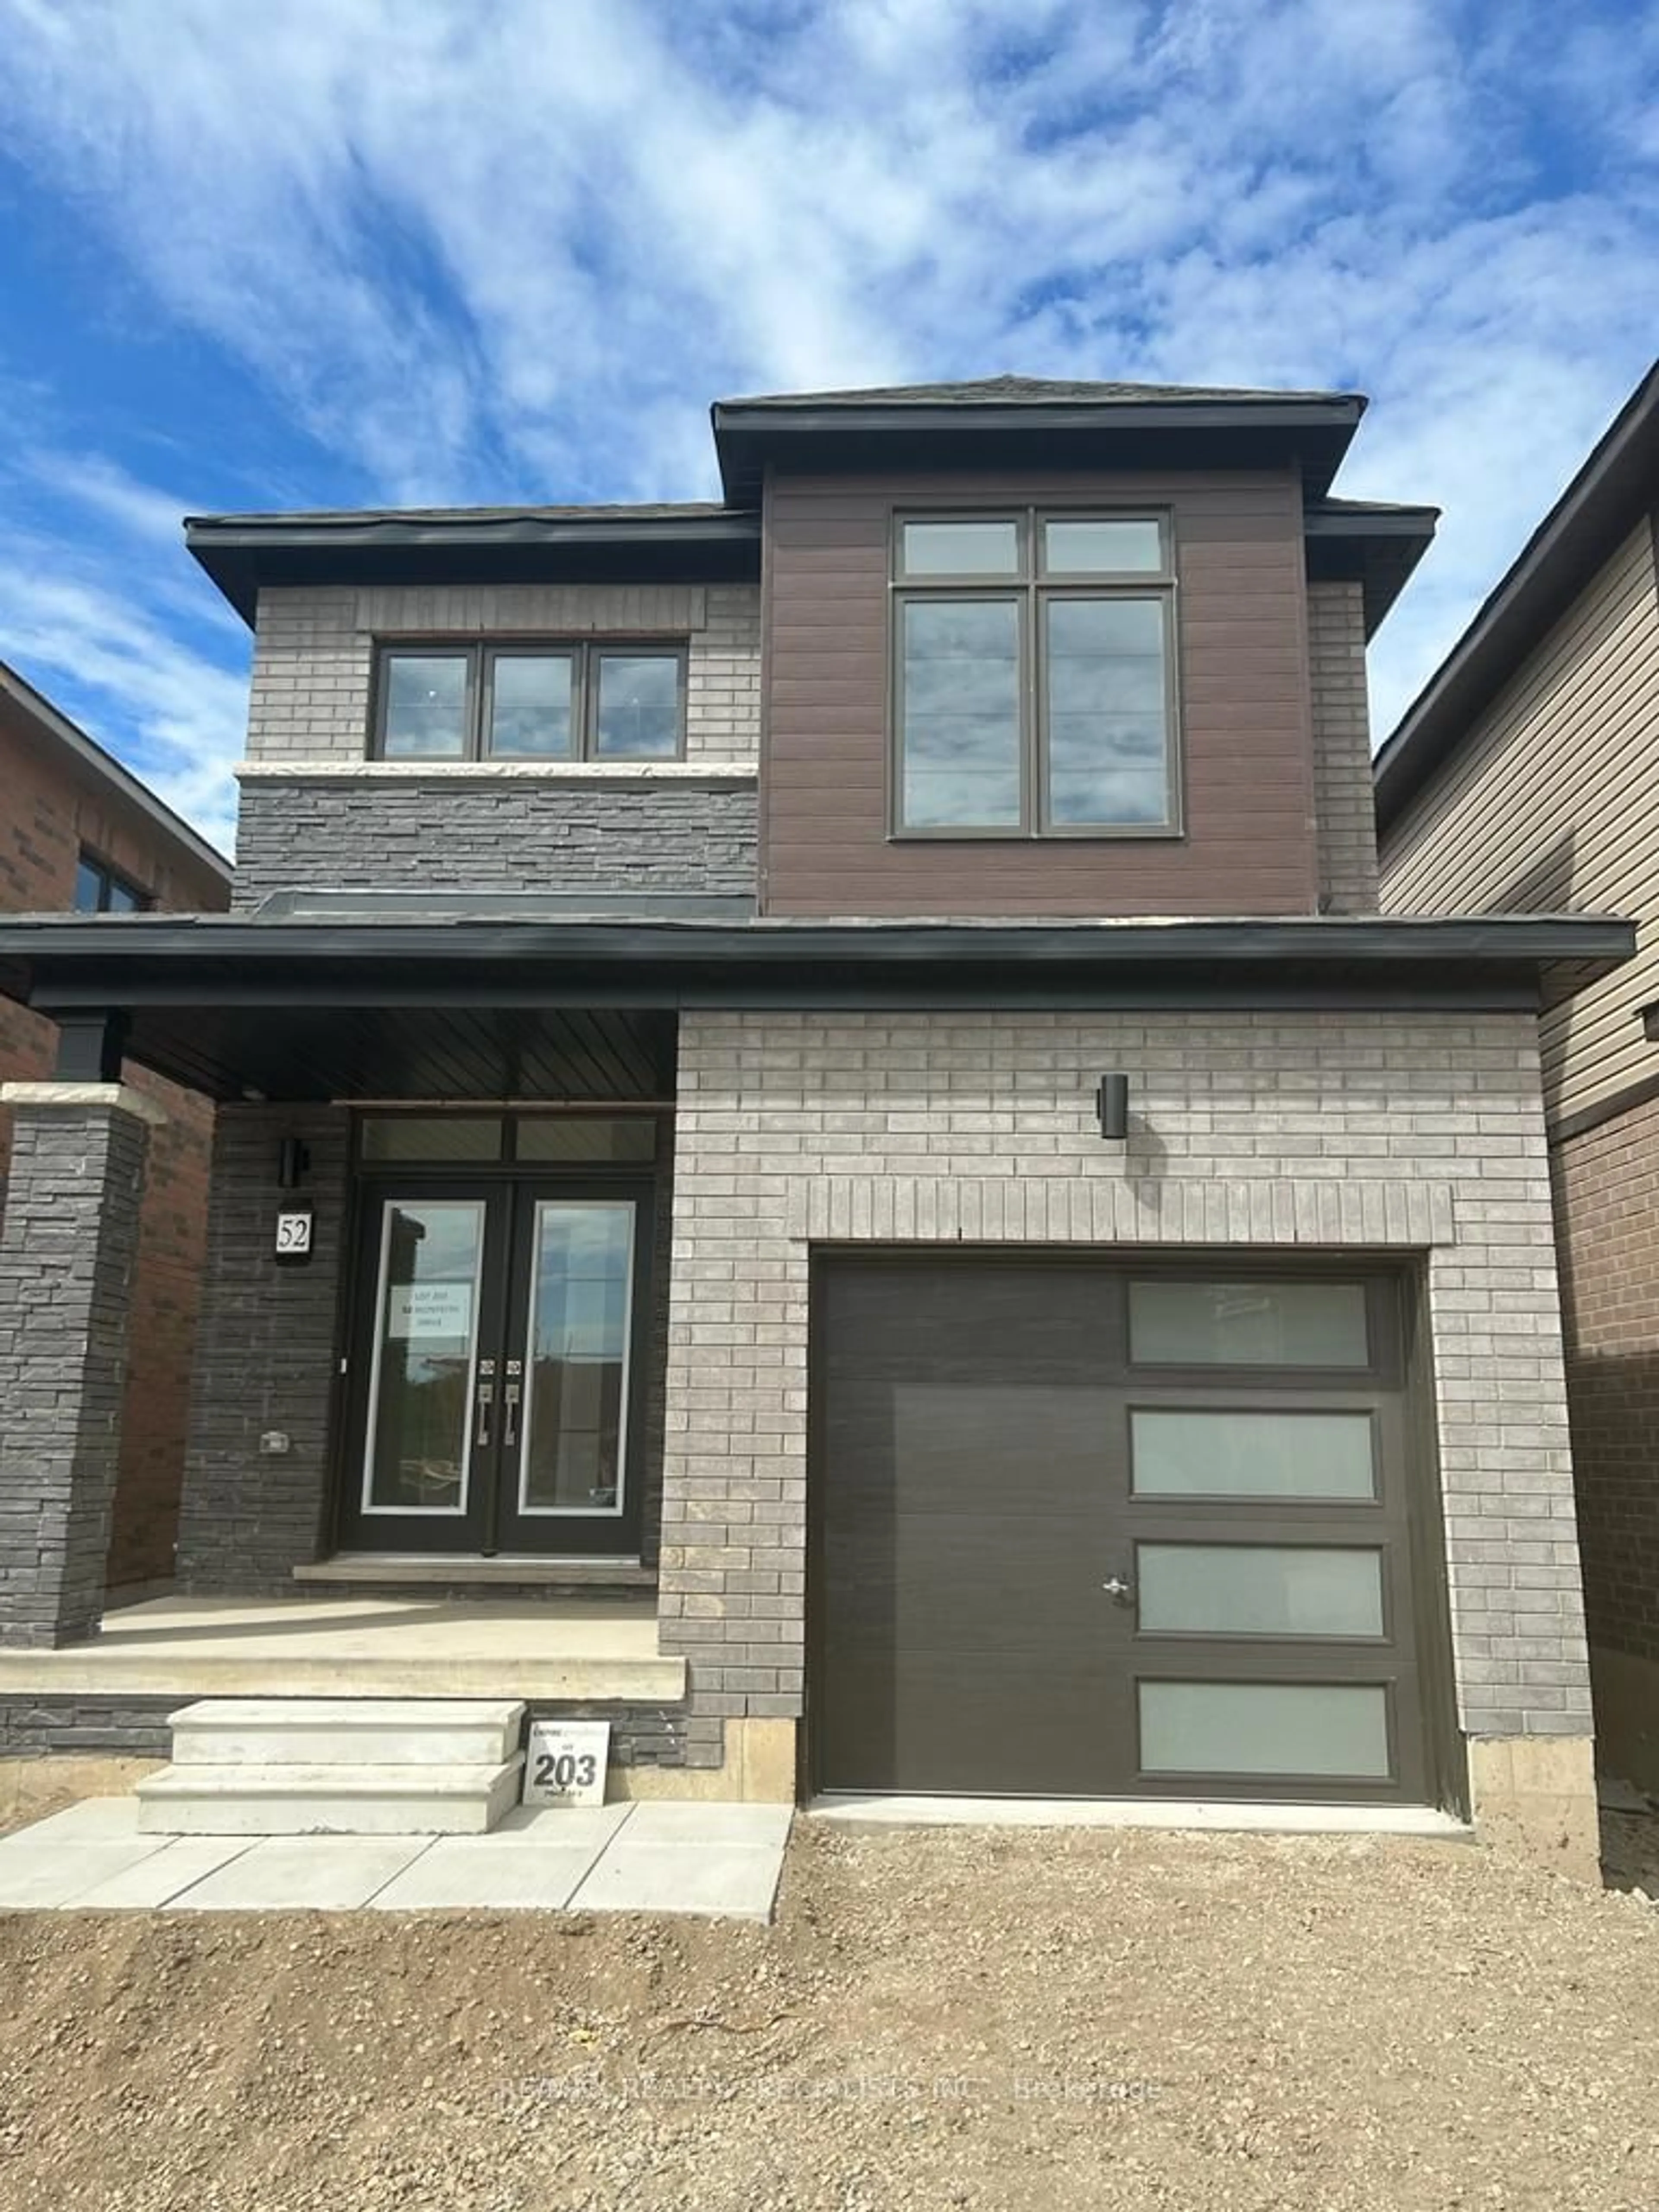 Home with brick exterior material for Lot 203 Sunridge, Brantford Ontario N3T 0V8